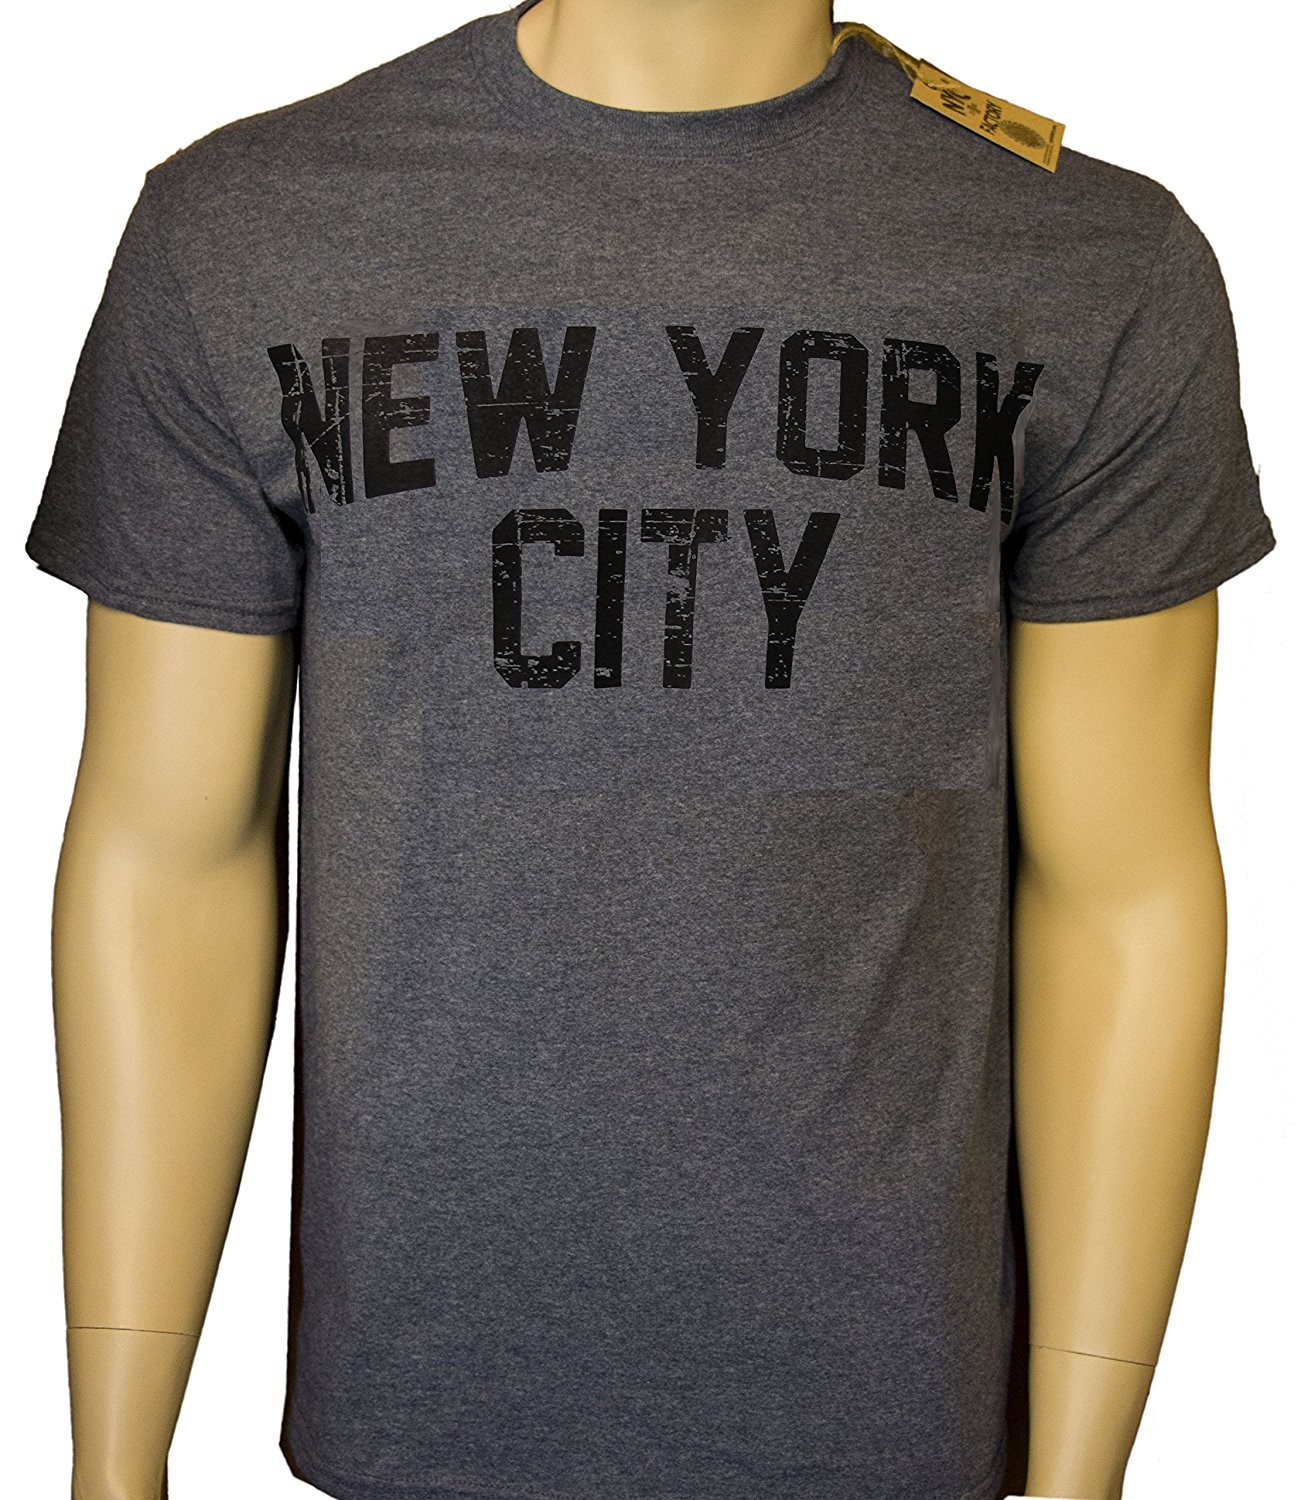 New York City Unisex T-Shirt Distressed Screenprinted Charocal Lennon Tee